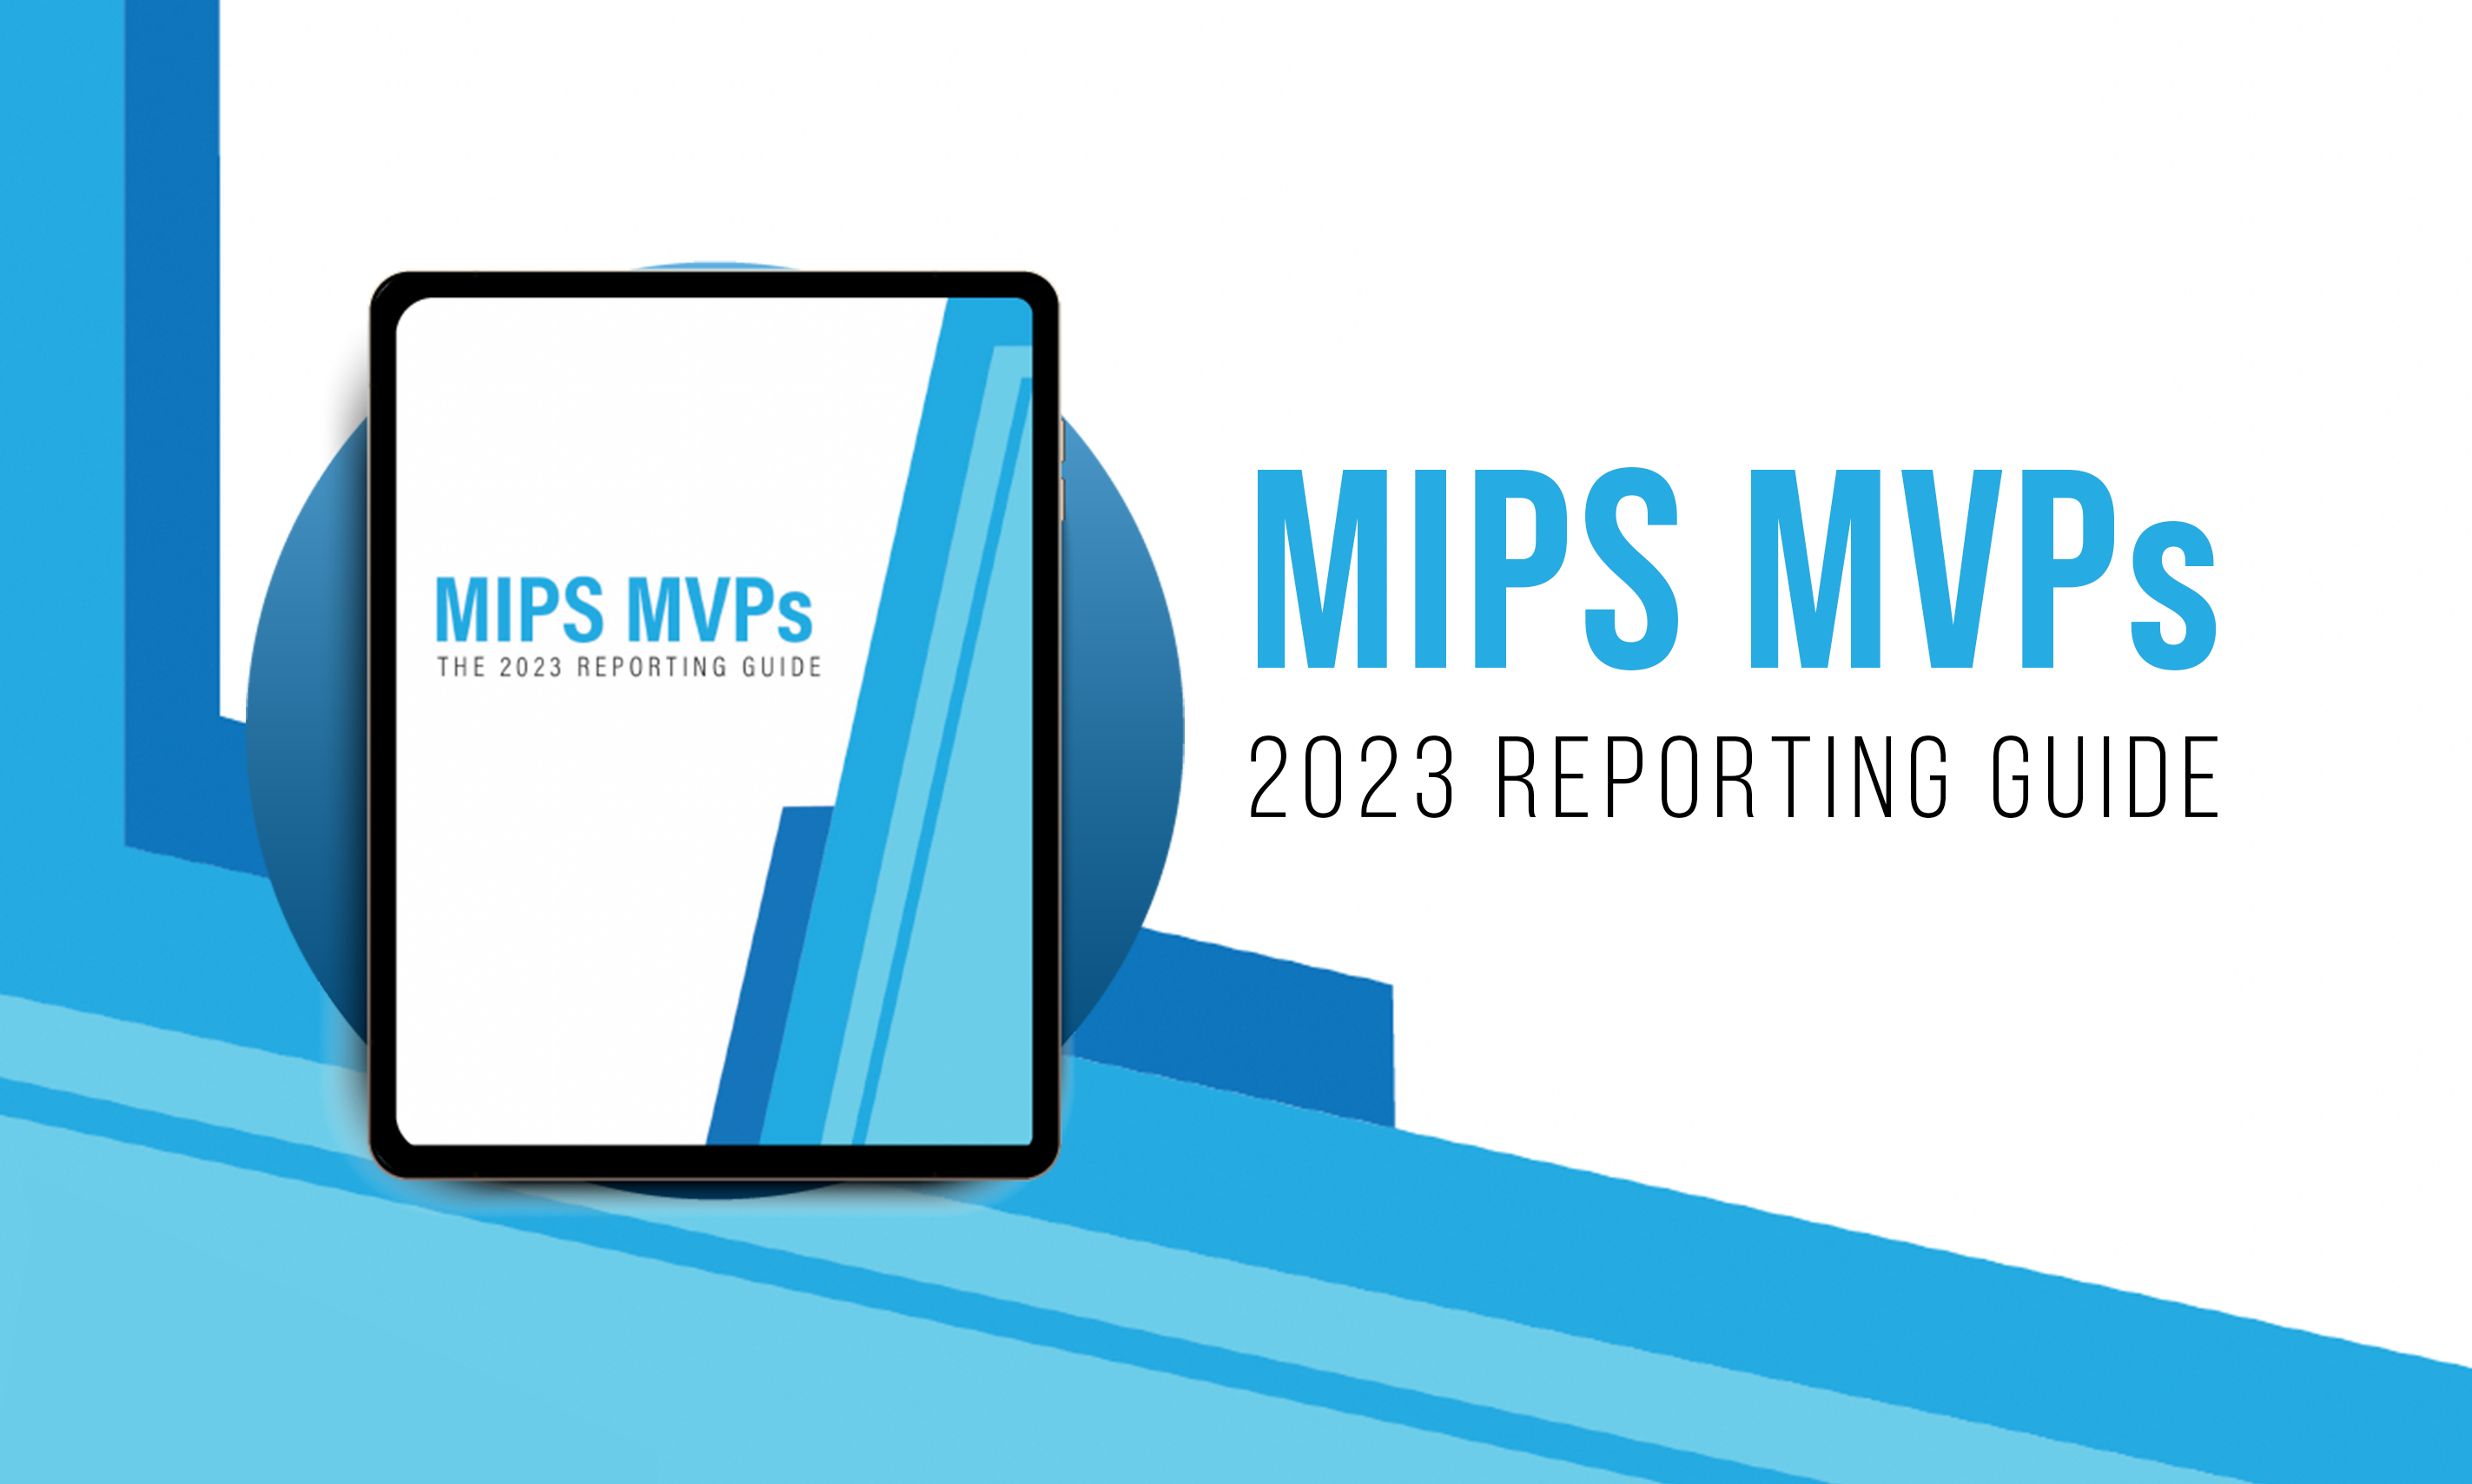 MIPS MVPs 2023 Reporting Guide